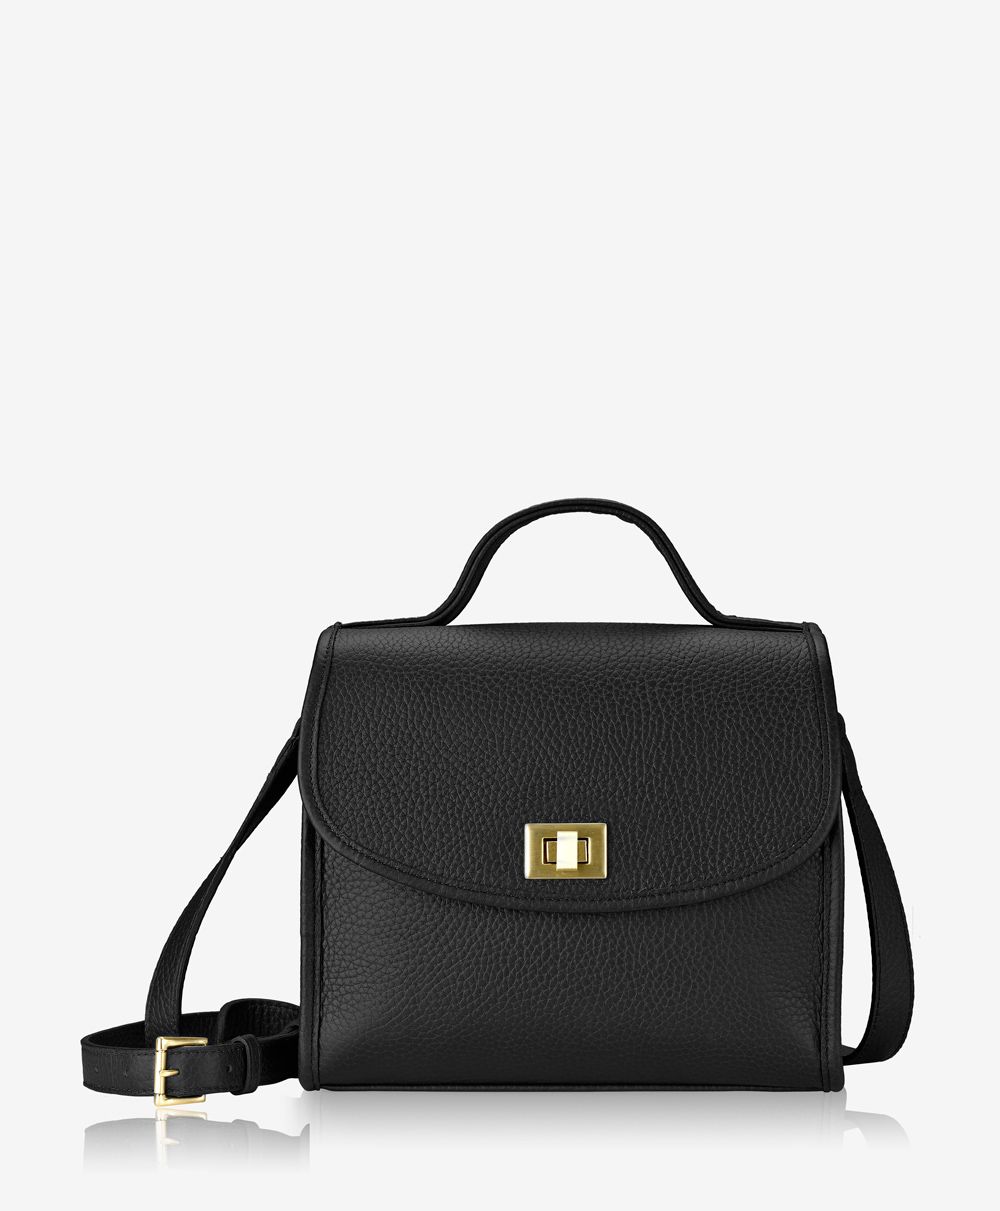 Amelie Crossbody Handbag Black Pebble Grain | GiGi New York